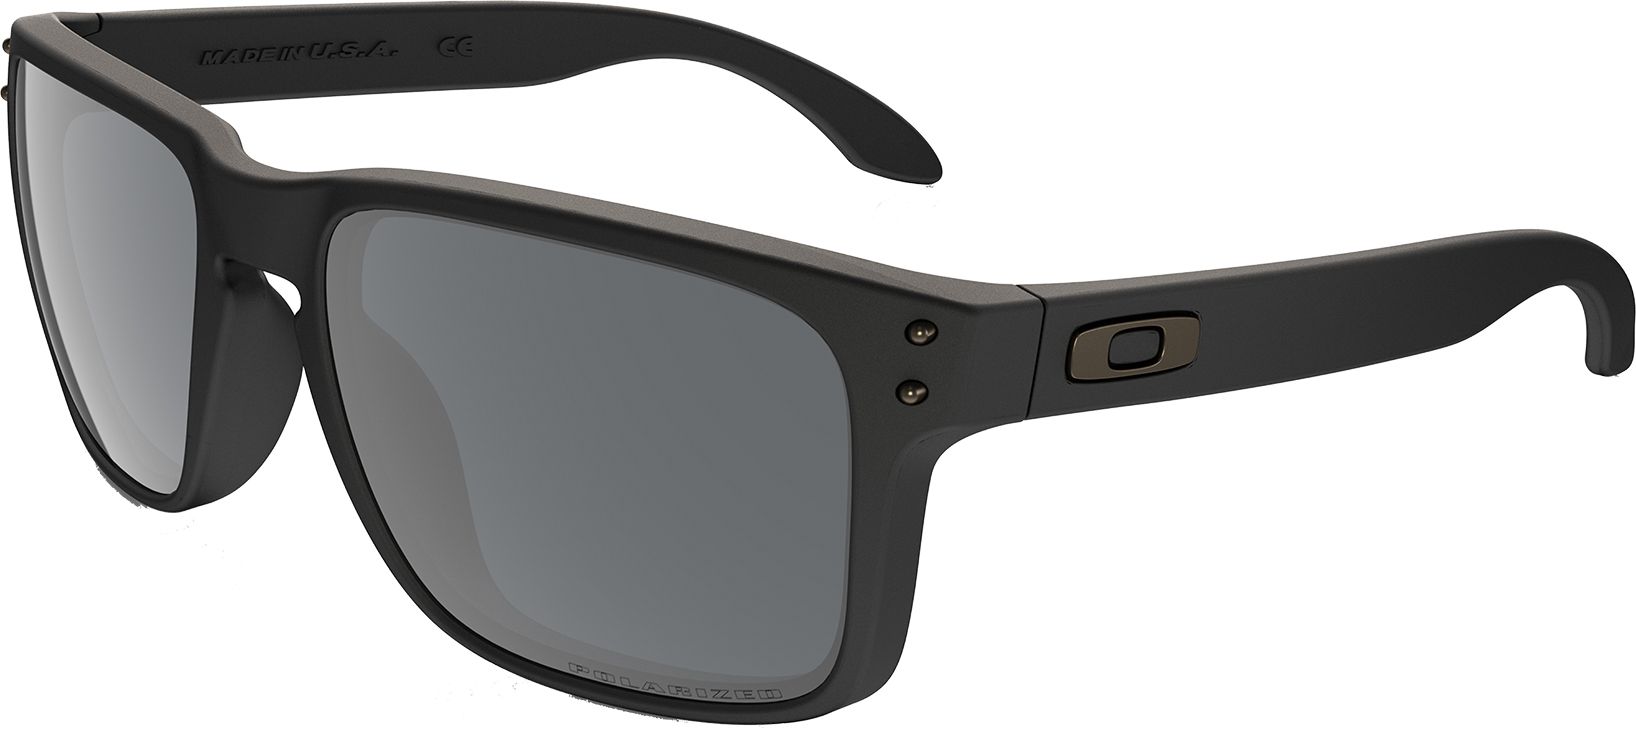 Sunglasses | DICK'S Sporting Goods